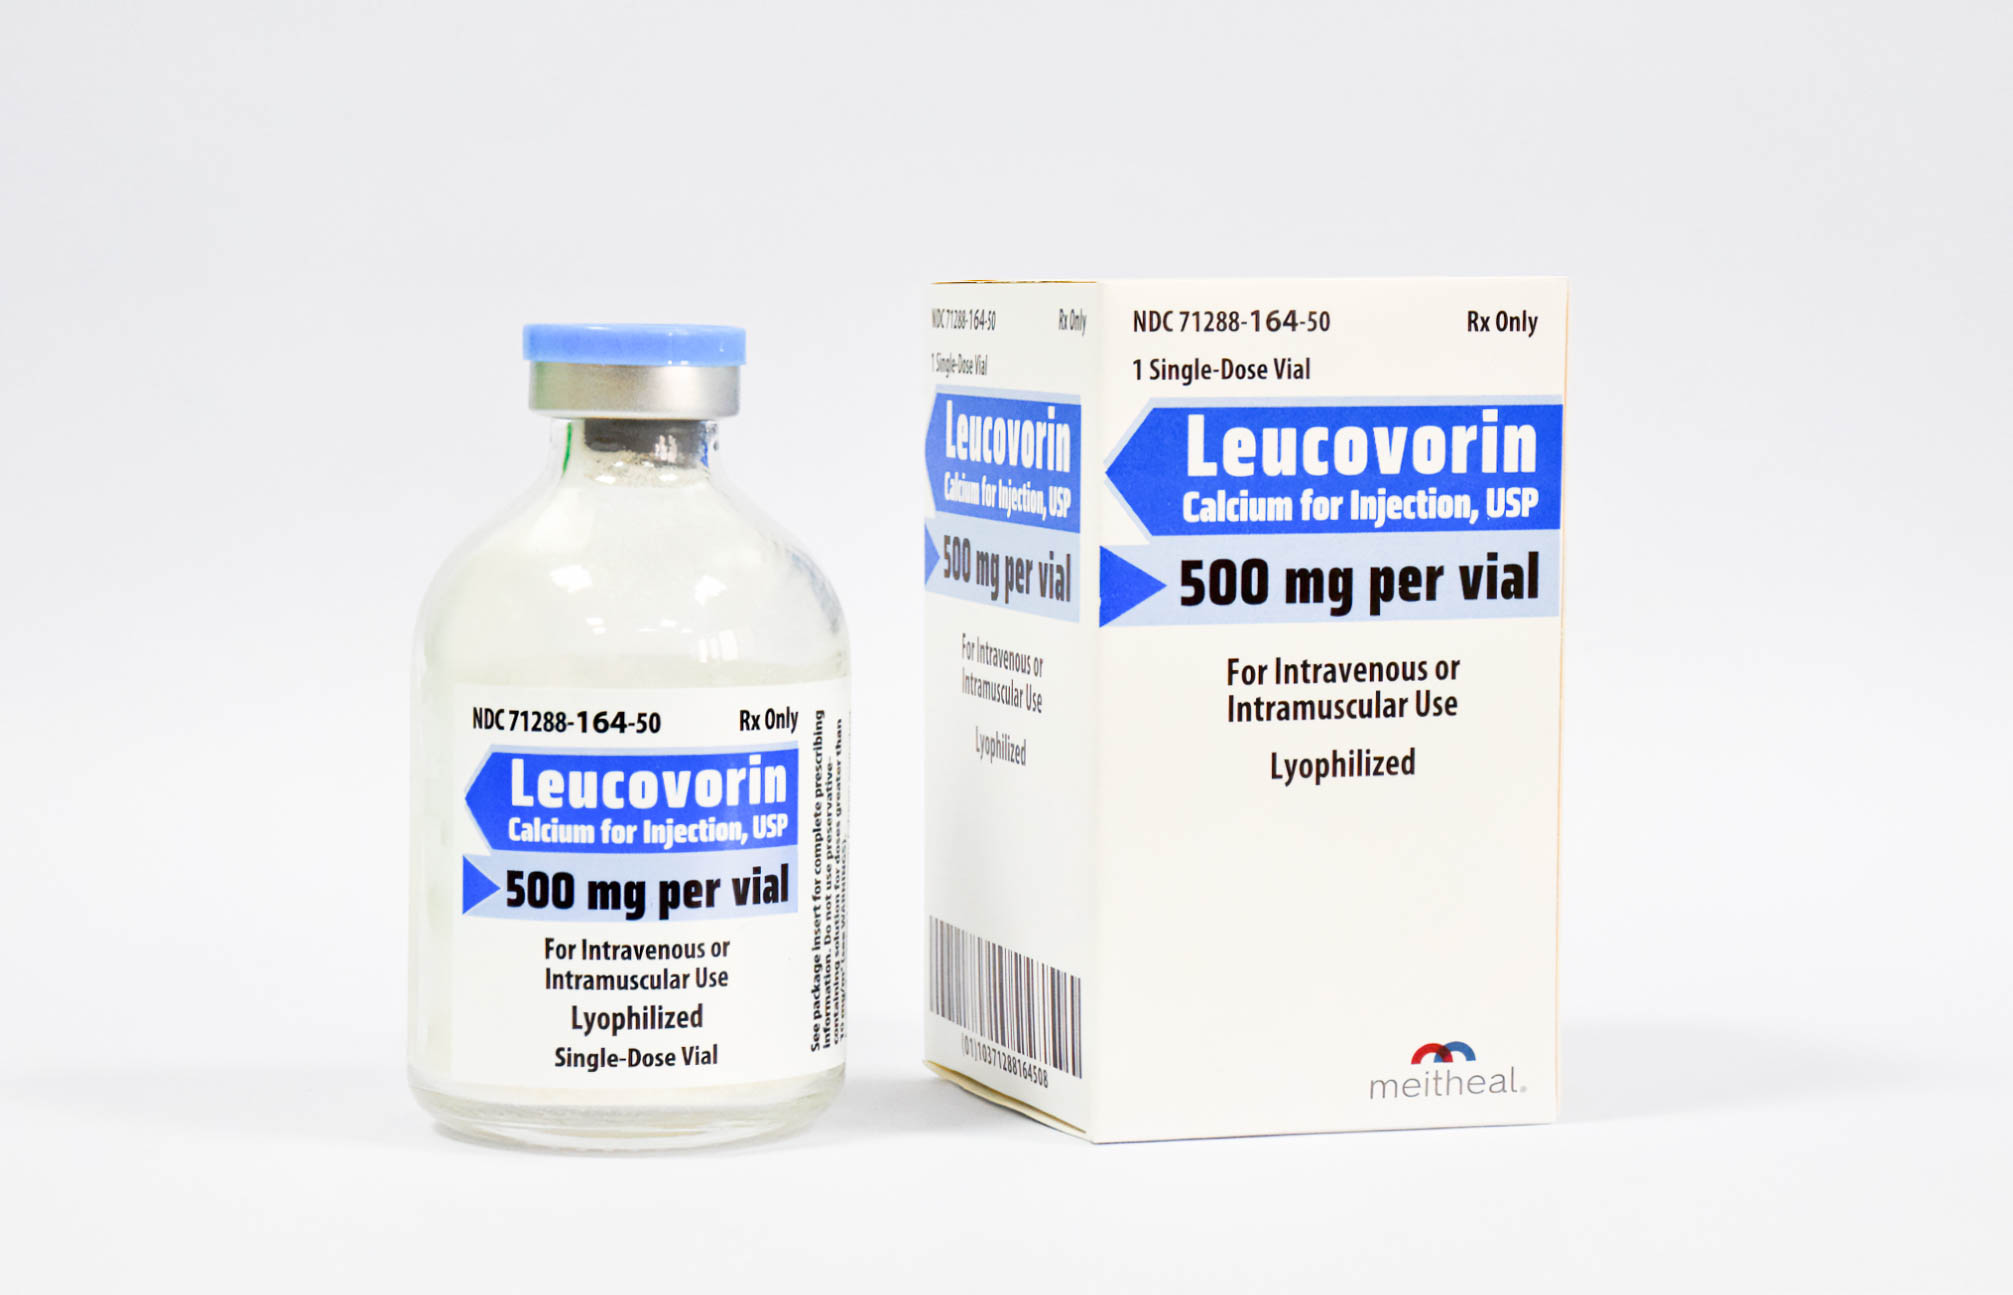 Leucovorin for Injection